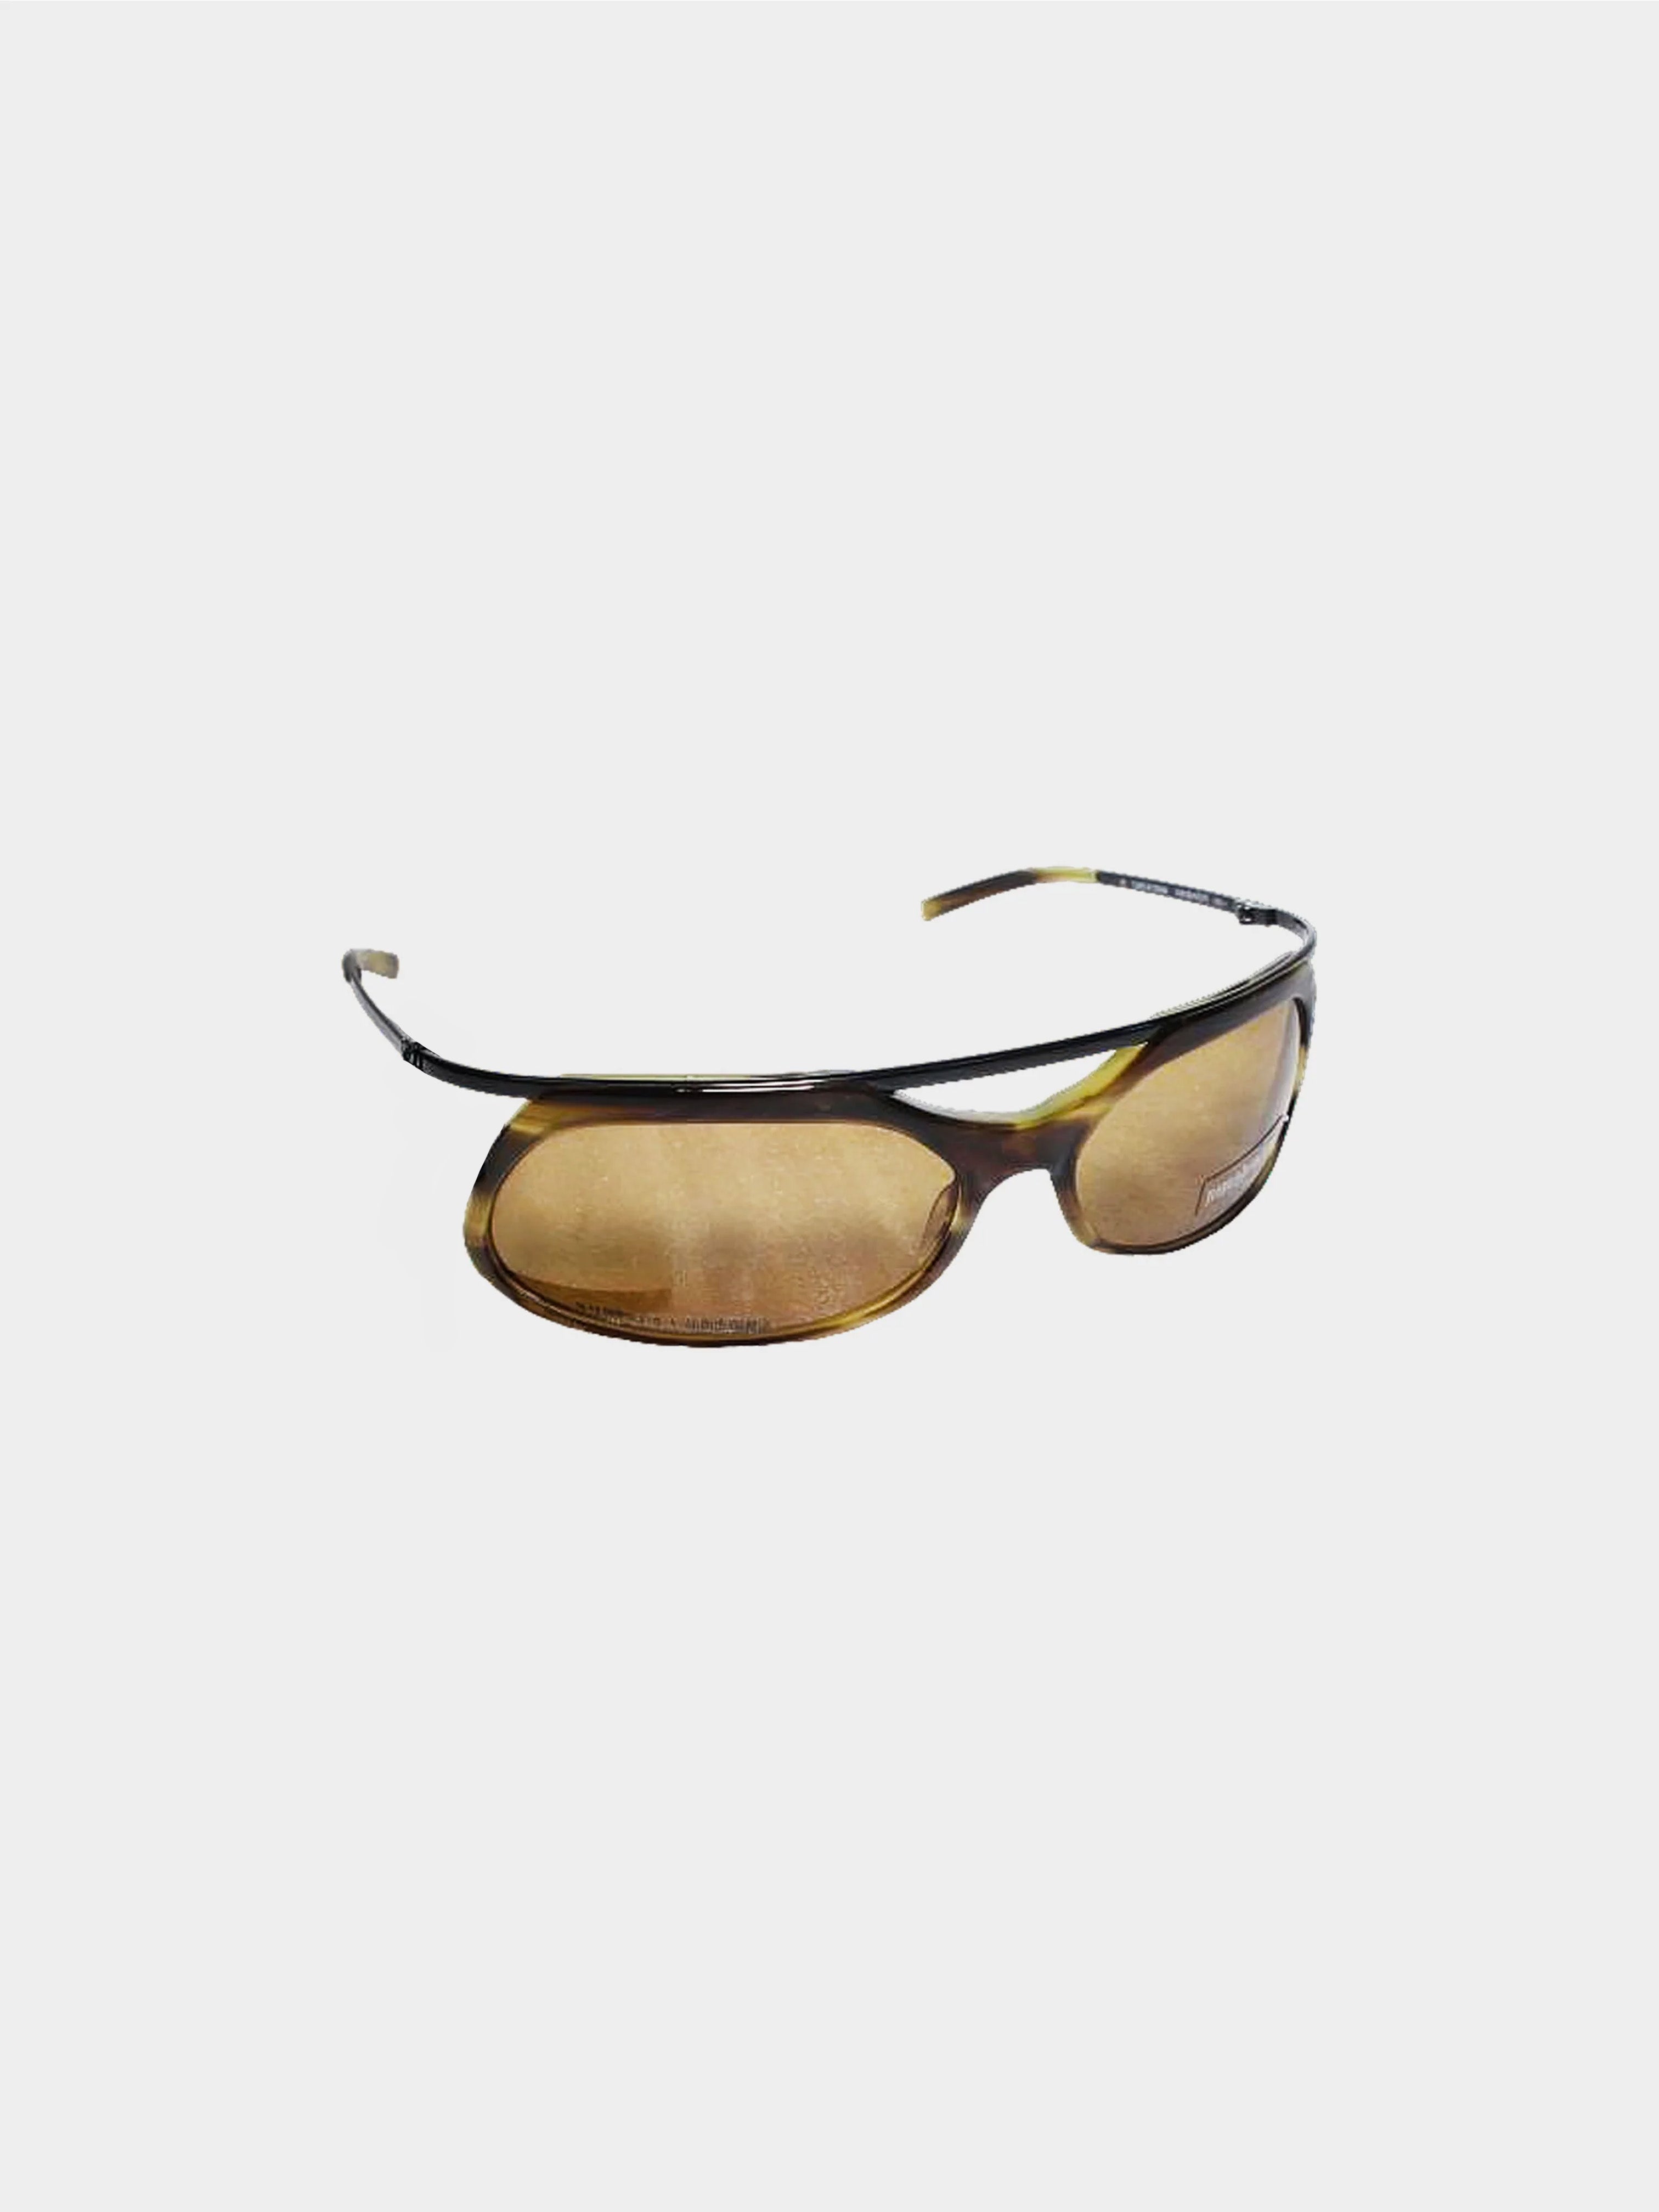 Yves Saint Laurent 2017 Tortoise Oval Sunglasses